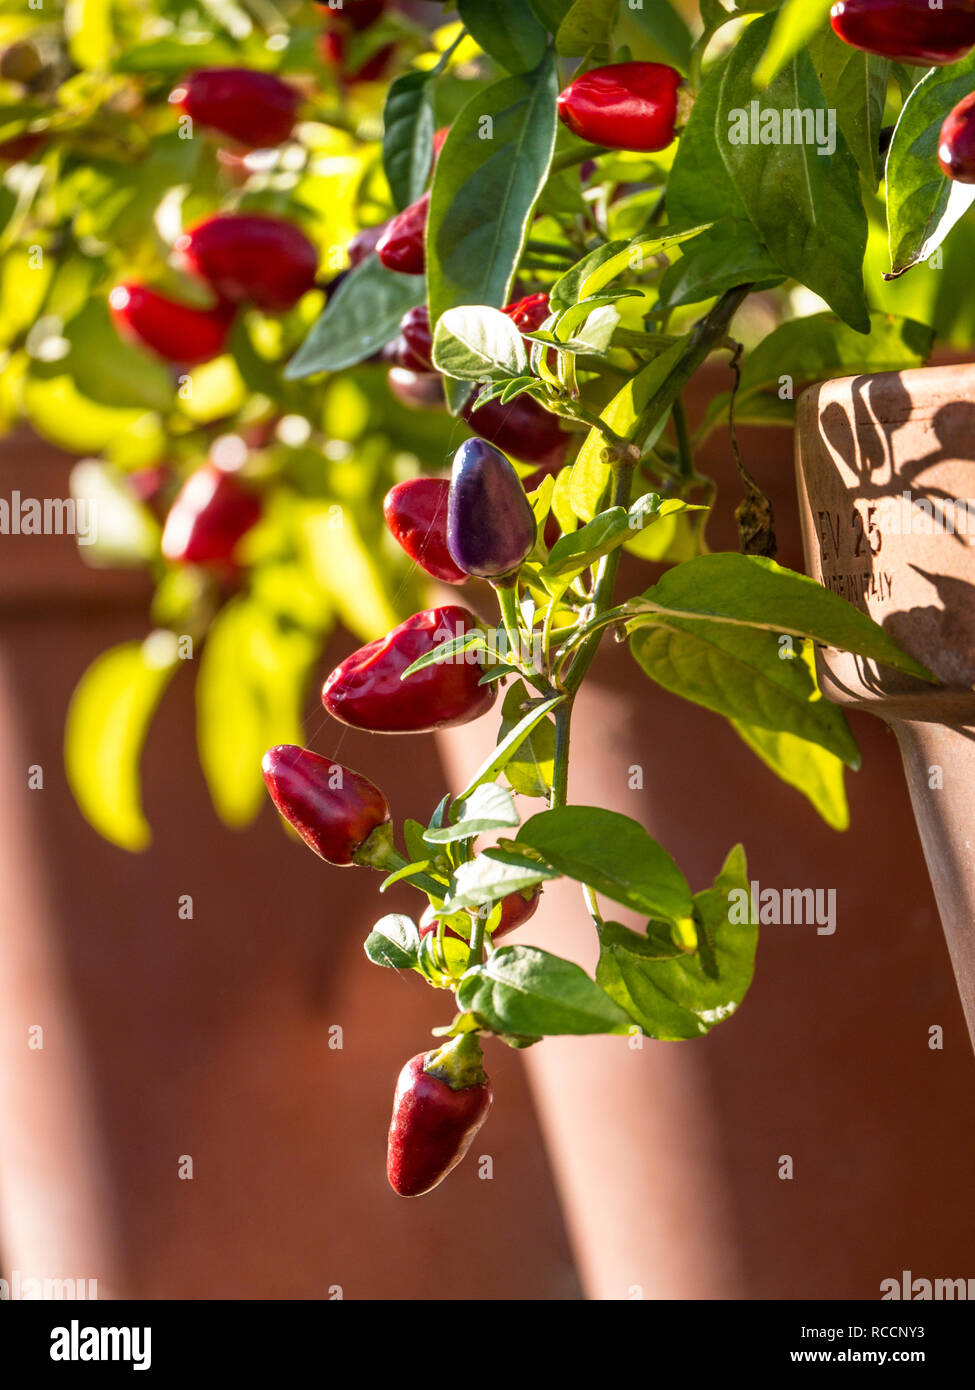 Chili Pepper 'Loco' Chili in Gewächshaus F1 Hybrid Capsicum annuum Chili Pepper eingegossen. Stockfoto